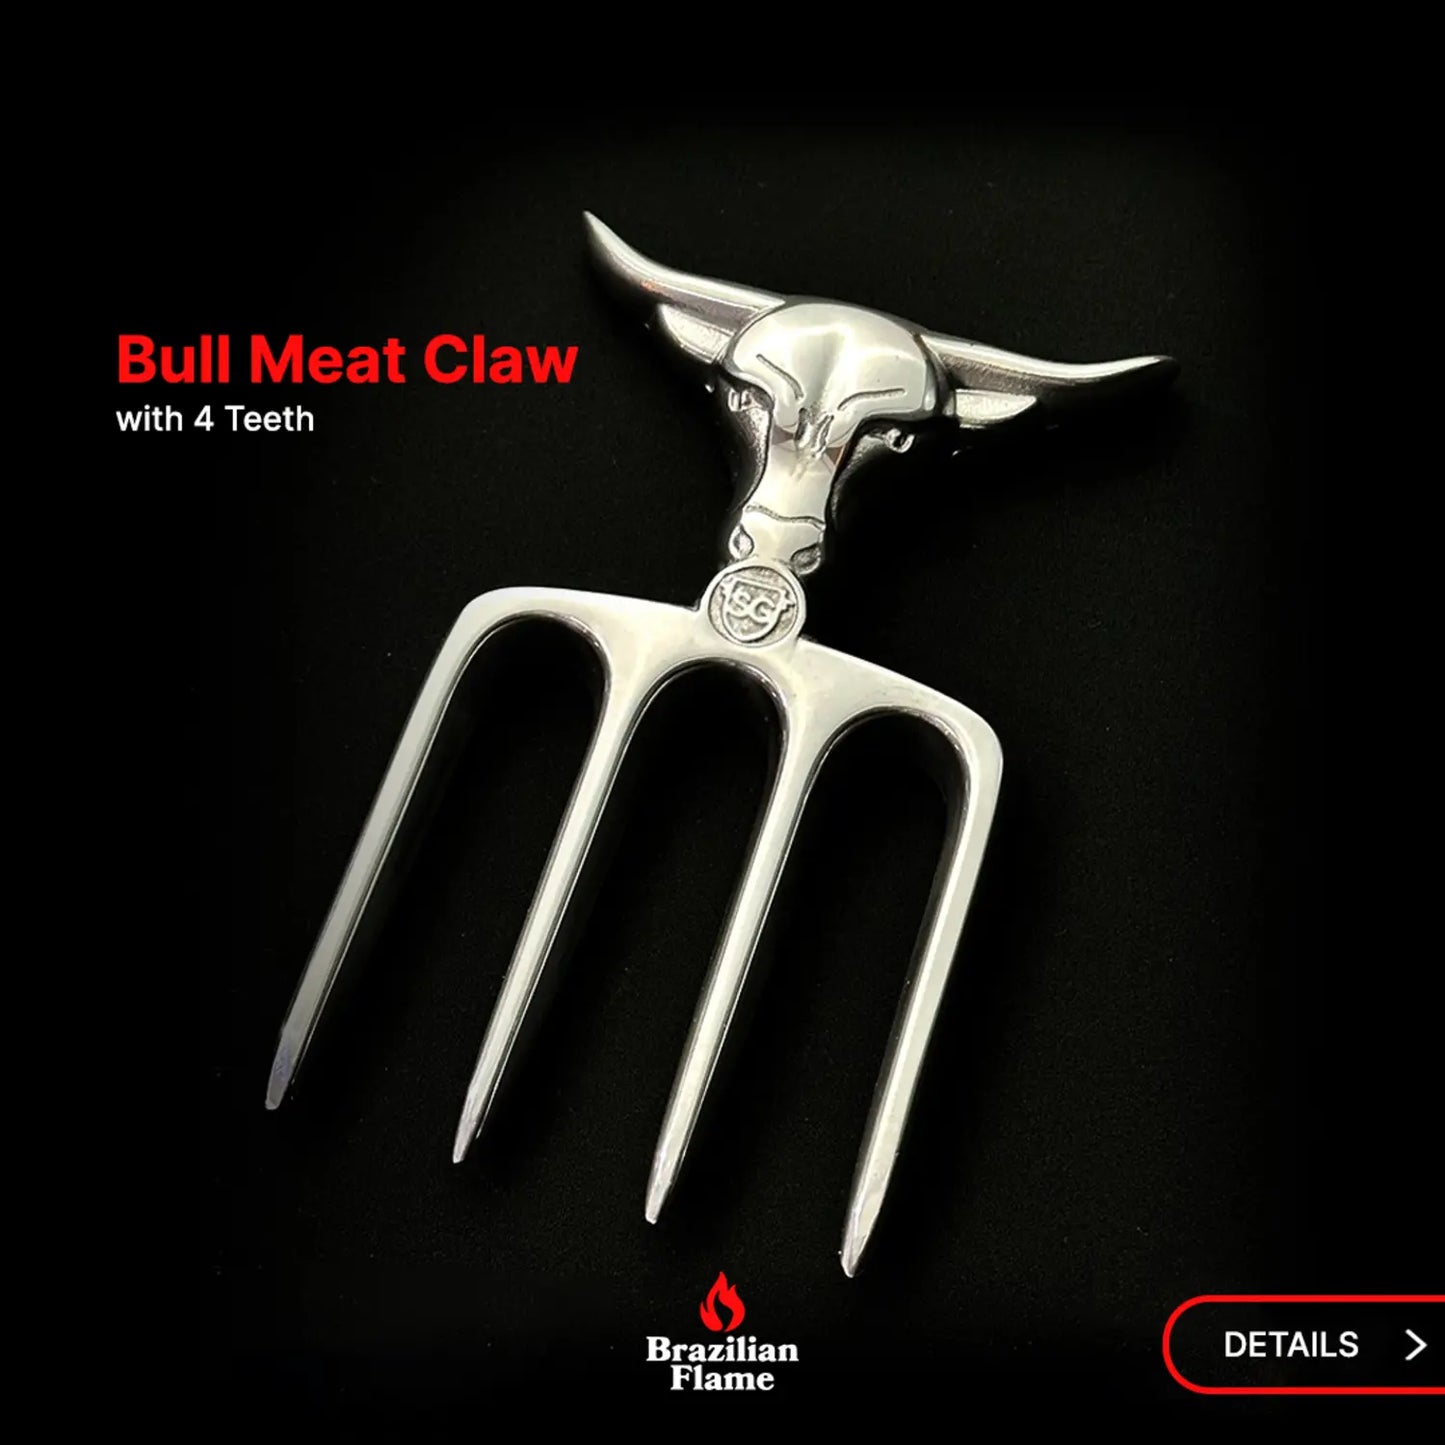 Brazilian Flame Meat Shredder Claw - Bull, 4 Long Teeth Fork